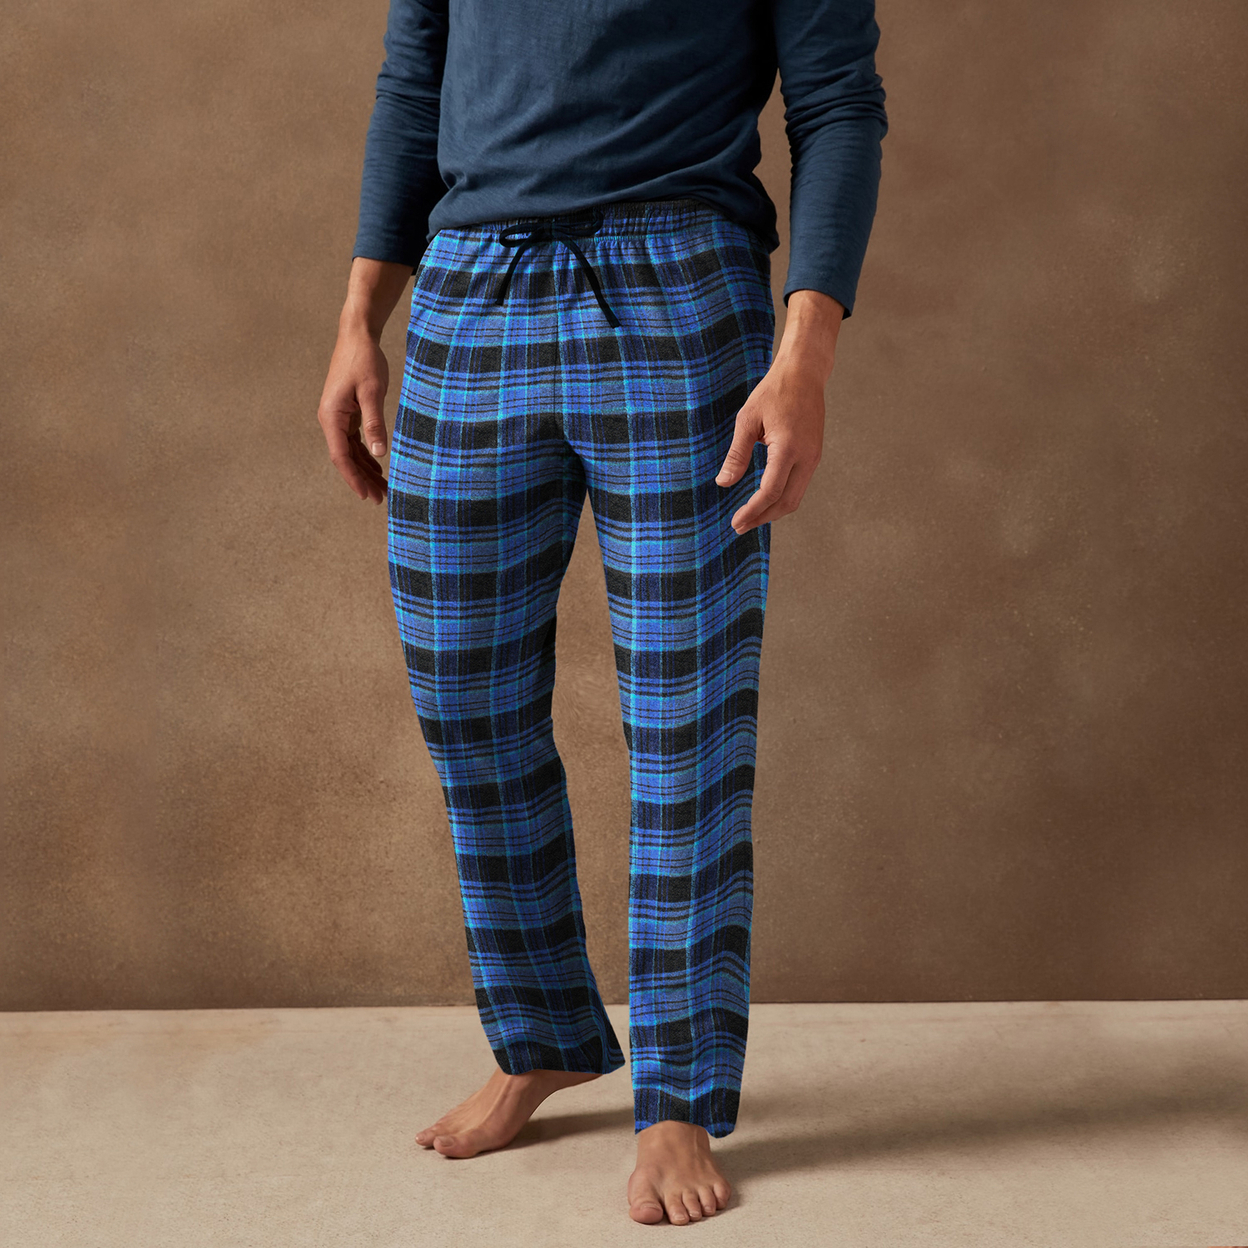 Men's Ultra-Soft Cozy Flannel Fleece Plaid Pajama Sleep Bottom Lounge Pants - Black, Large